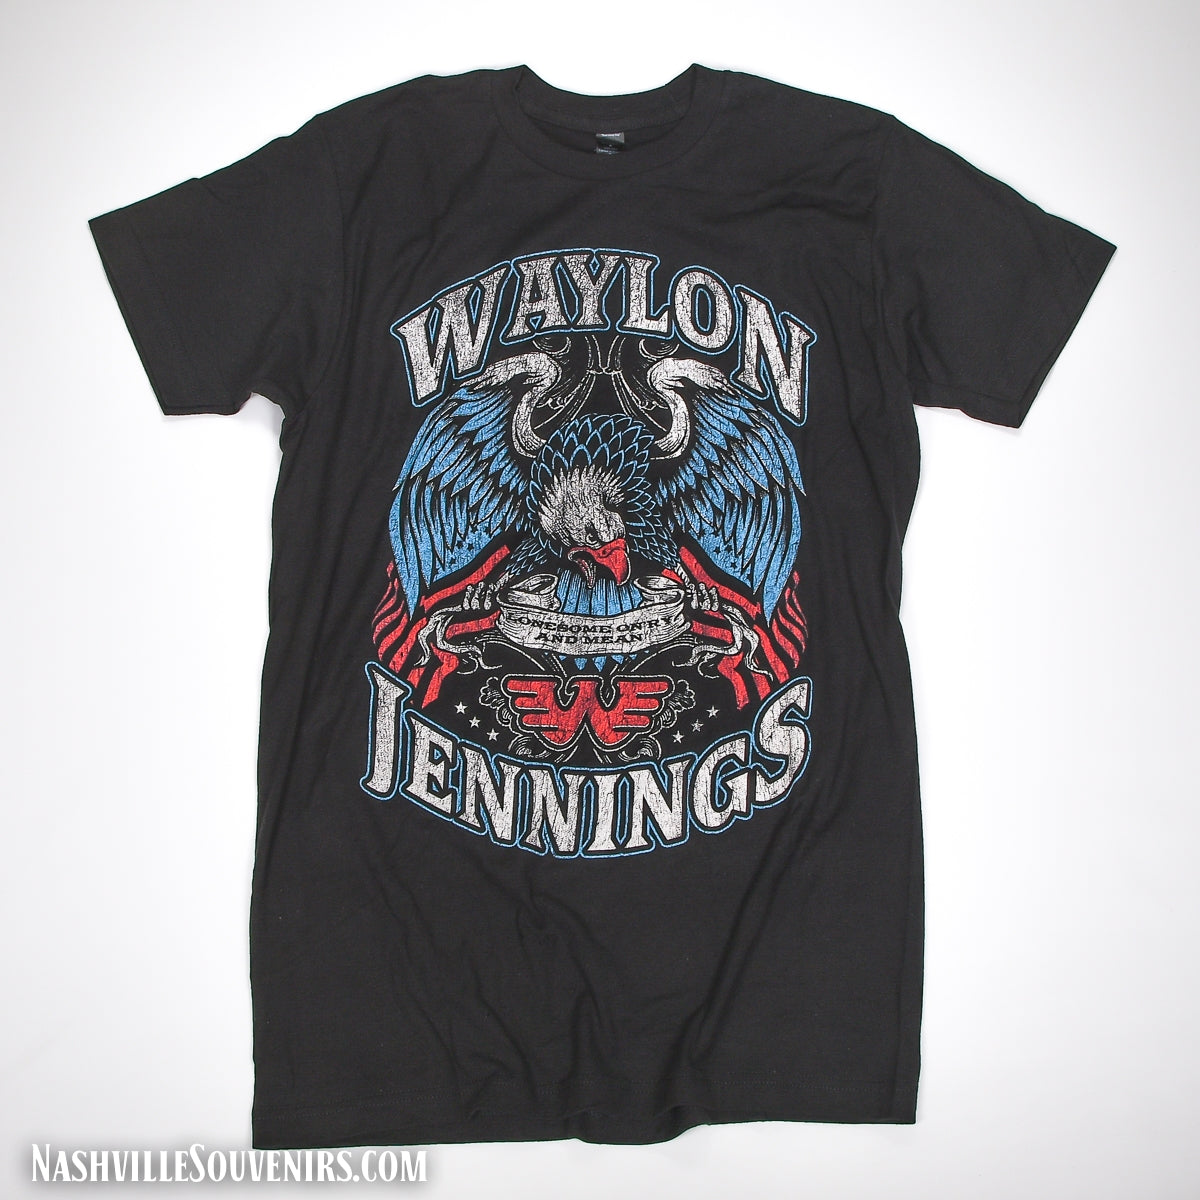 Waylon Jennings "Lonesome, On'ry, and Mean" Tee